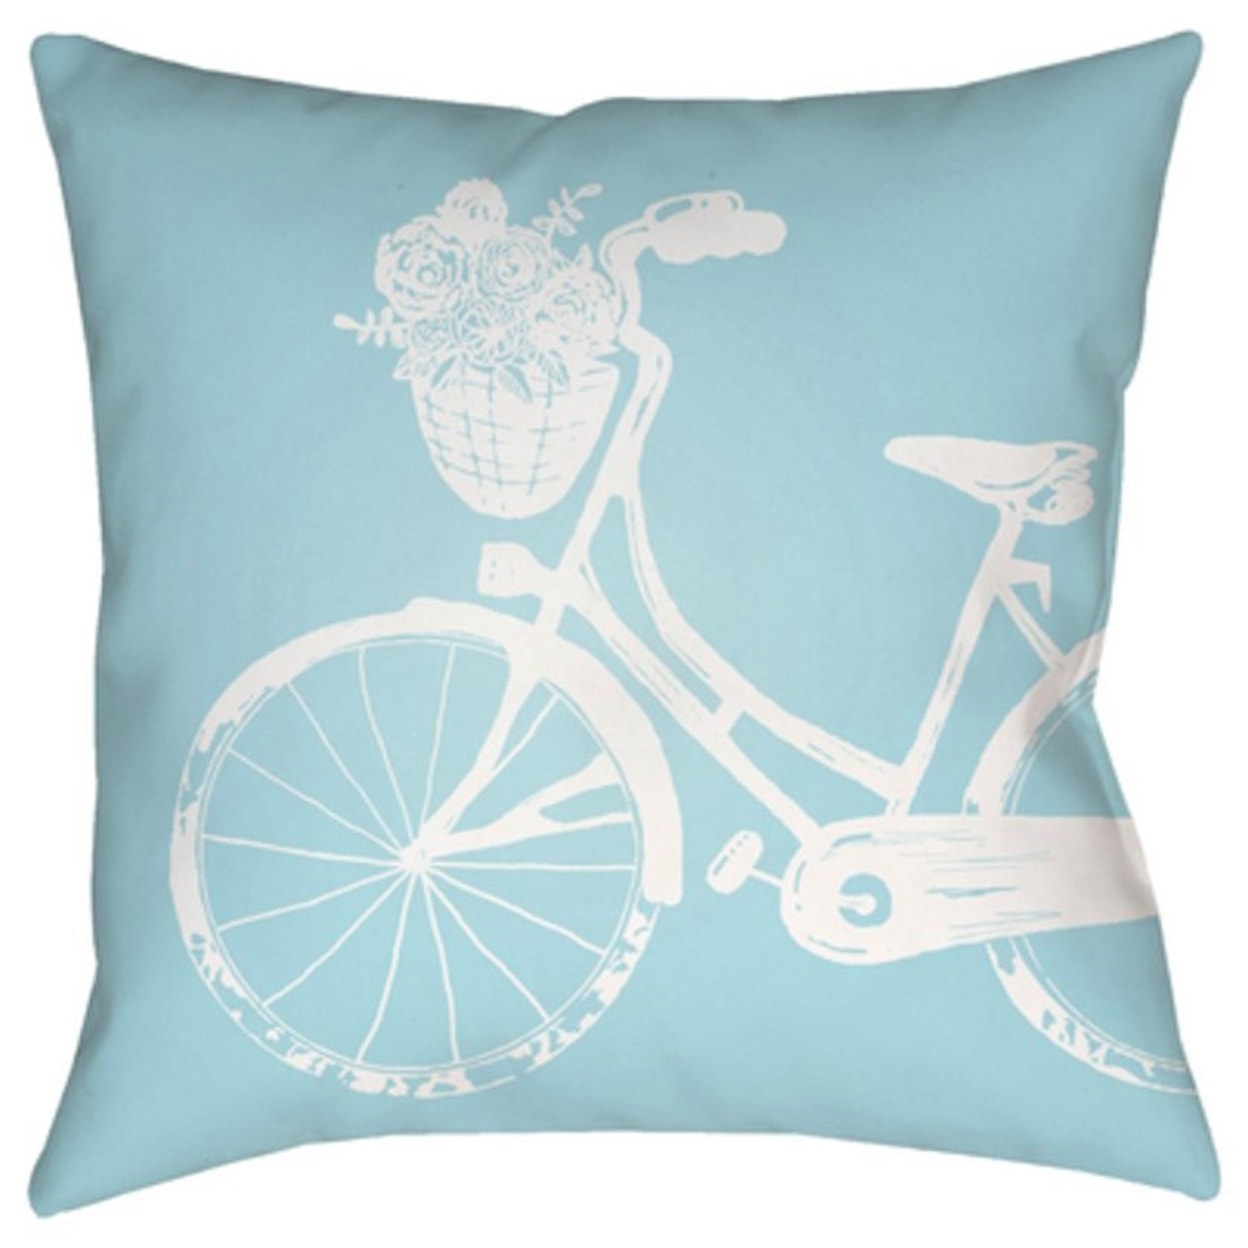 Surya Bicycle Pillow